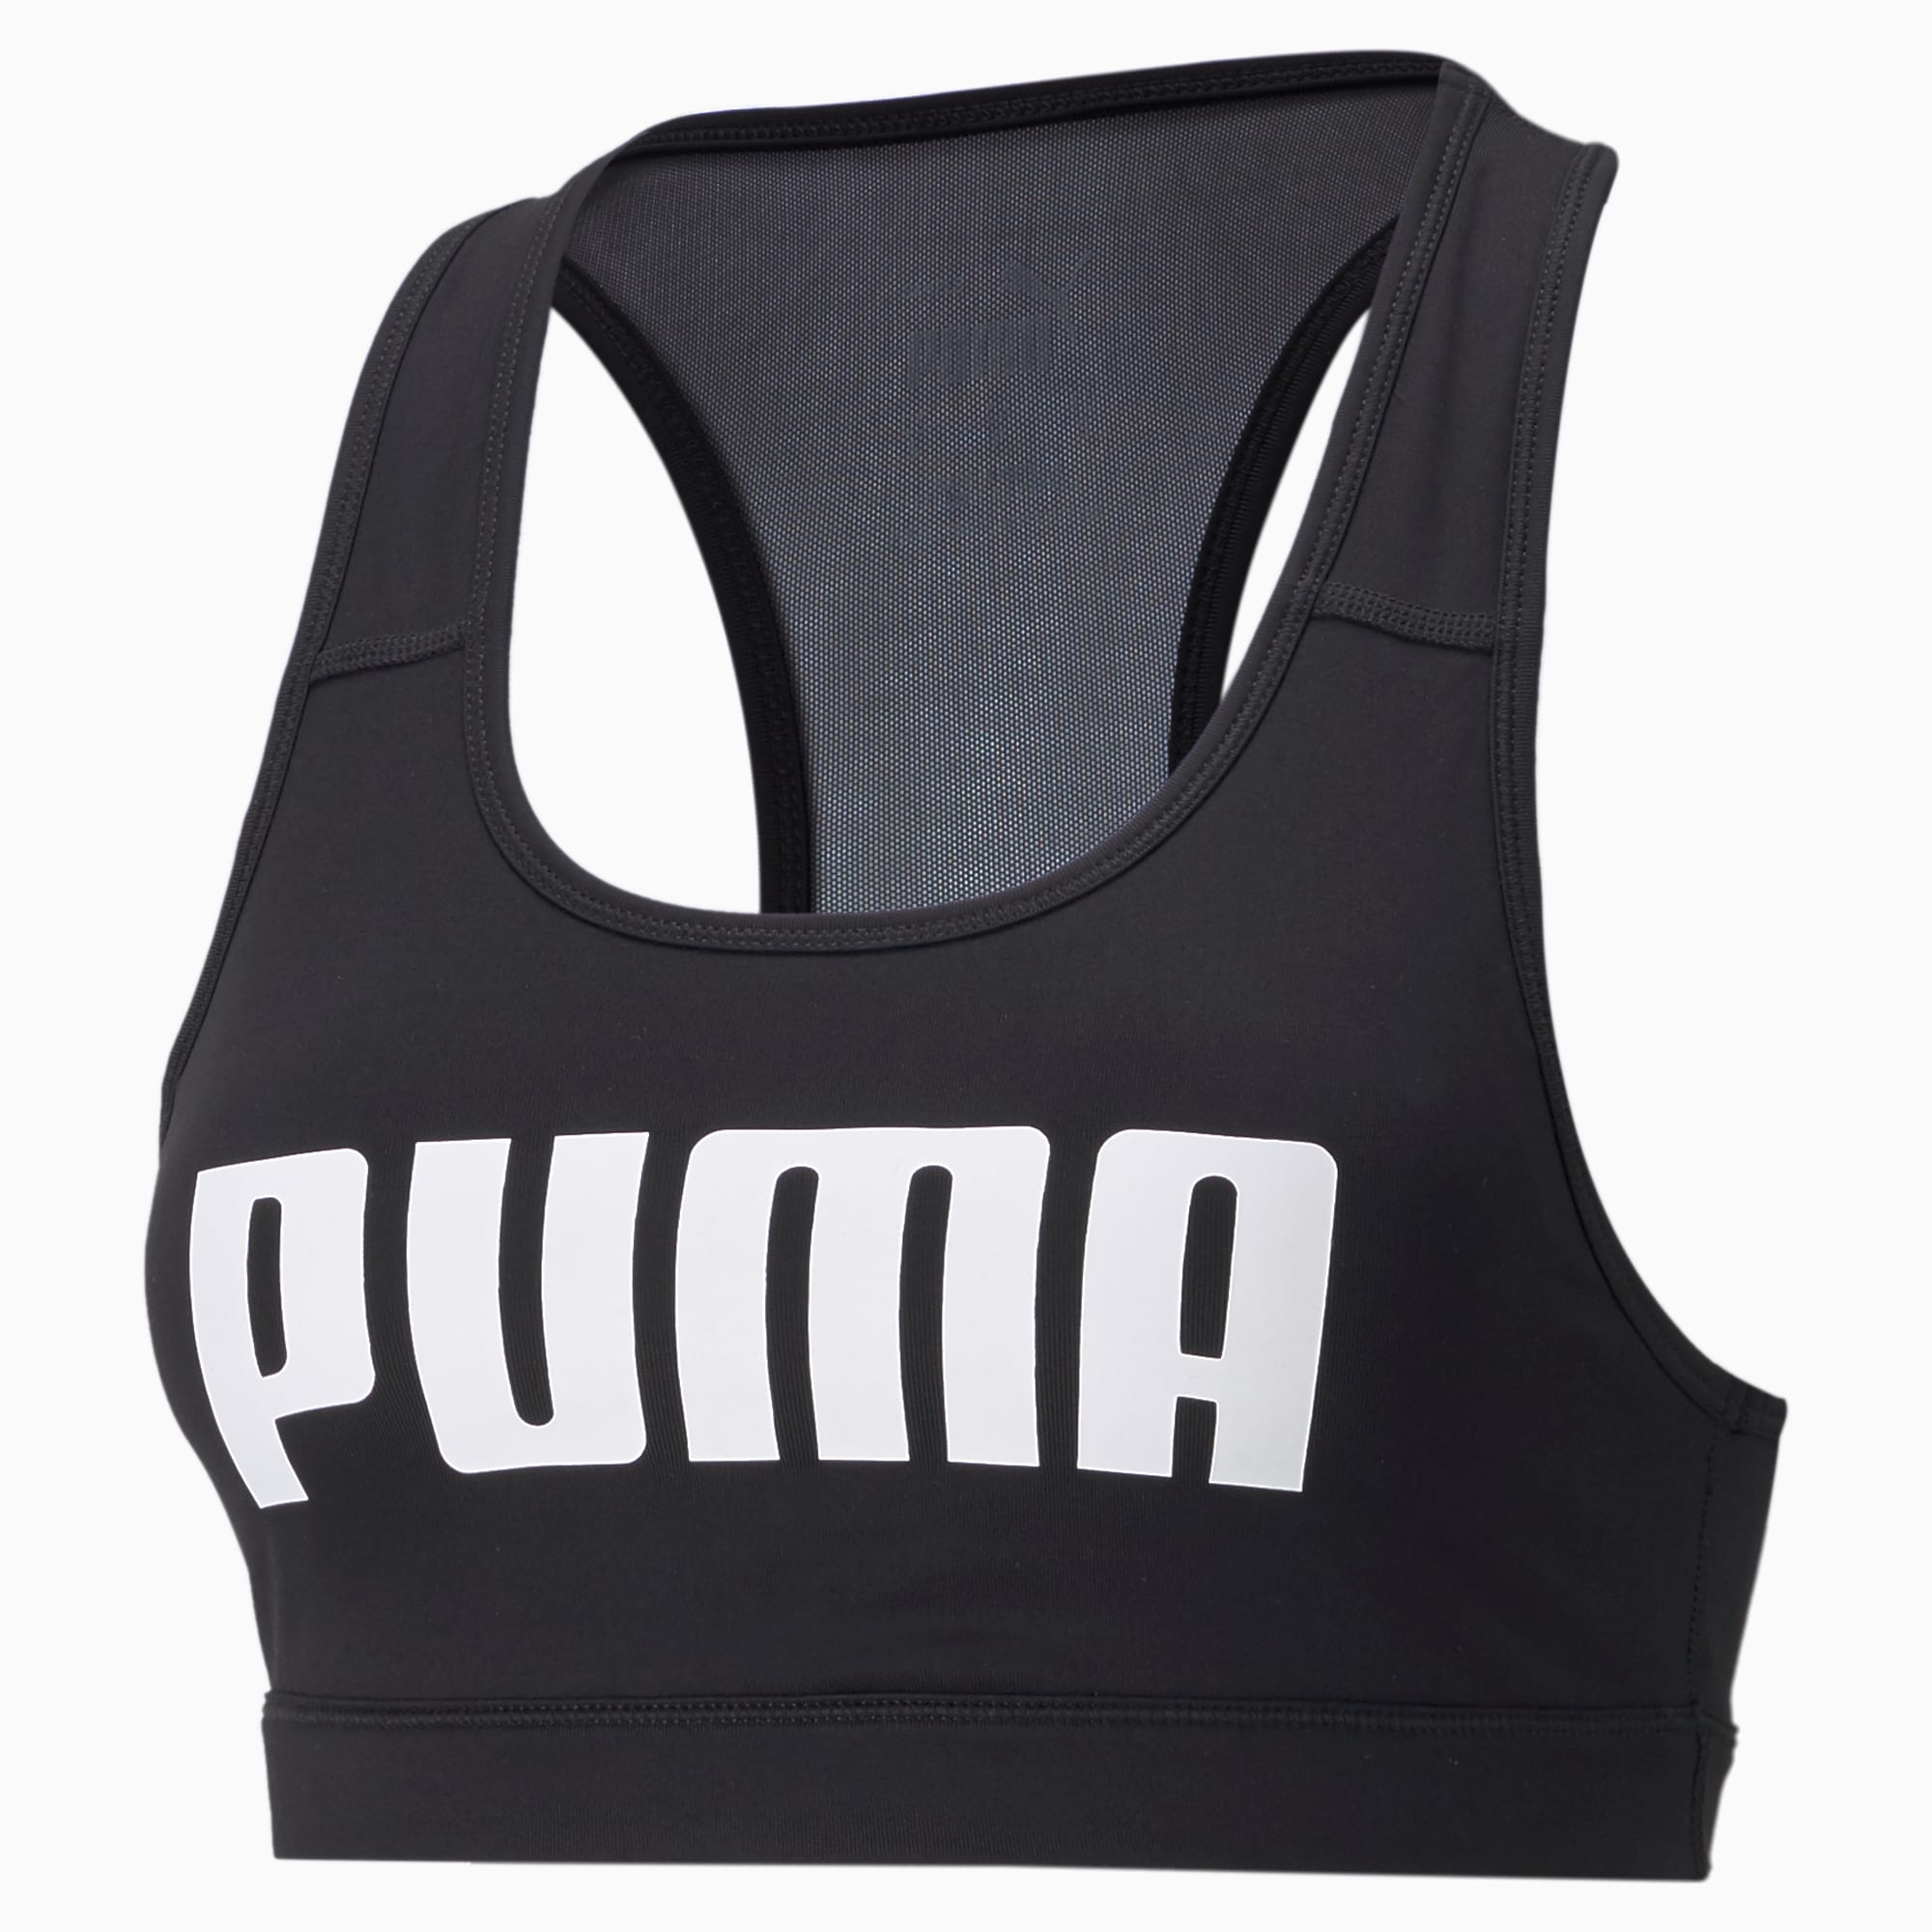 Puma Mid 4keeps Graphic Women's Training Sports Bra